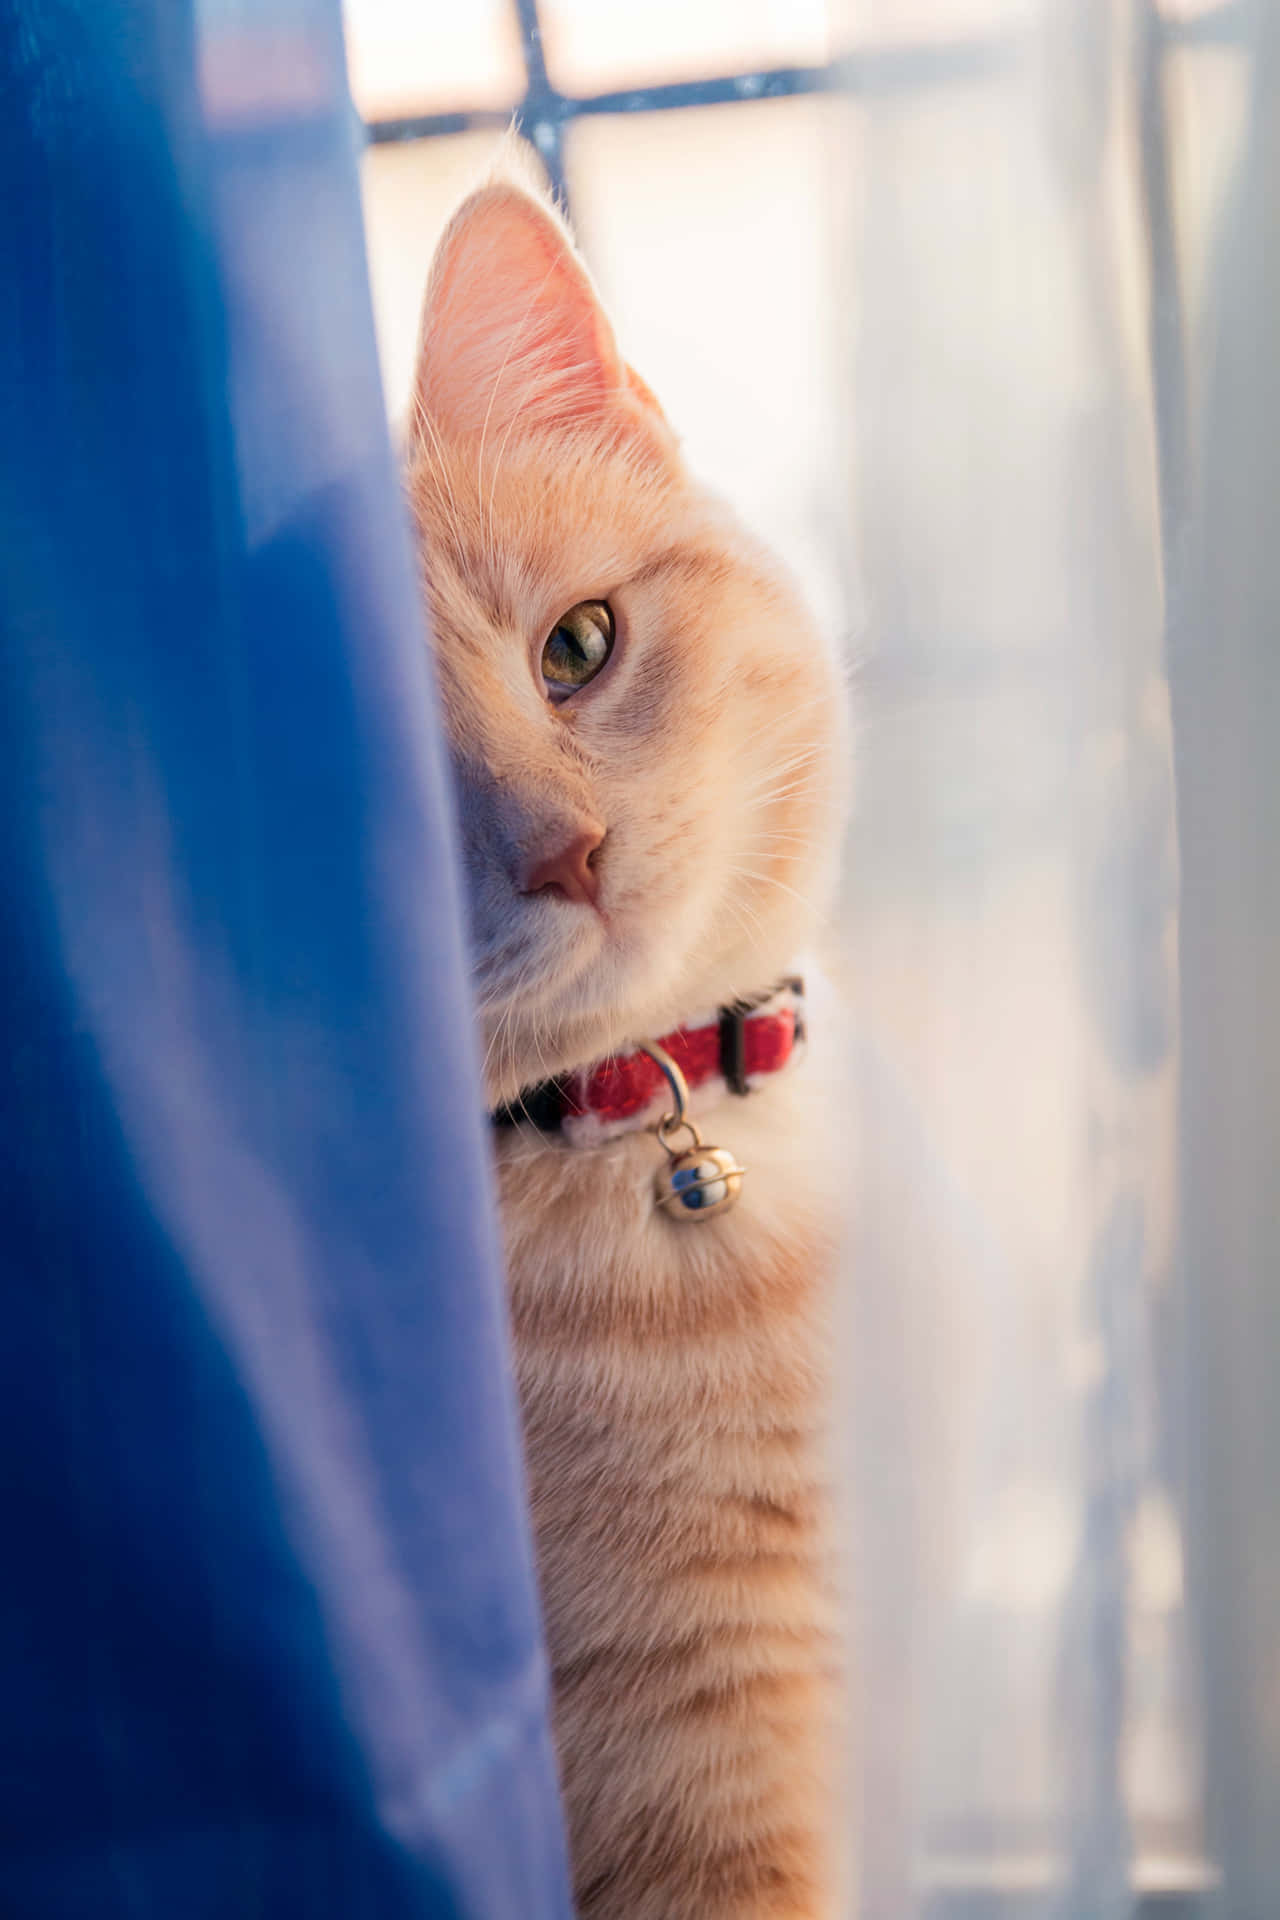 Caption: "Adorable Furry Companion Peering Through a Curtain" Wallpaper